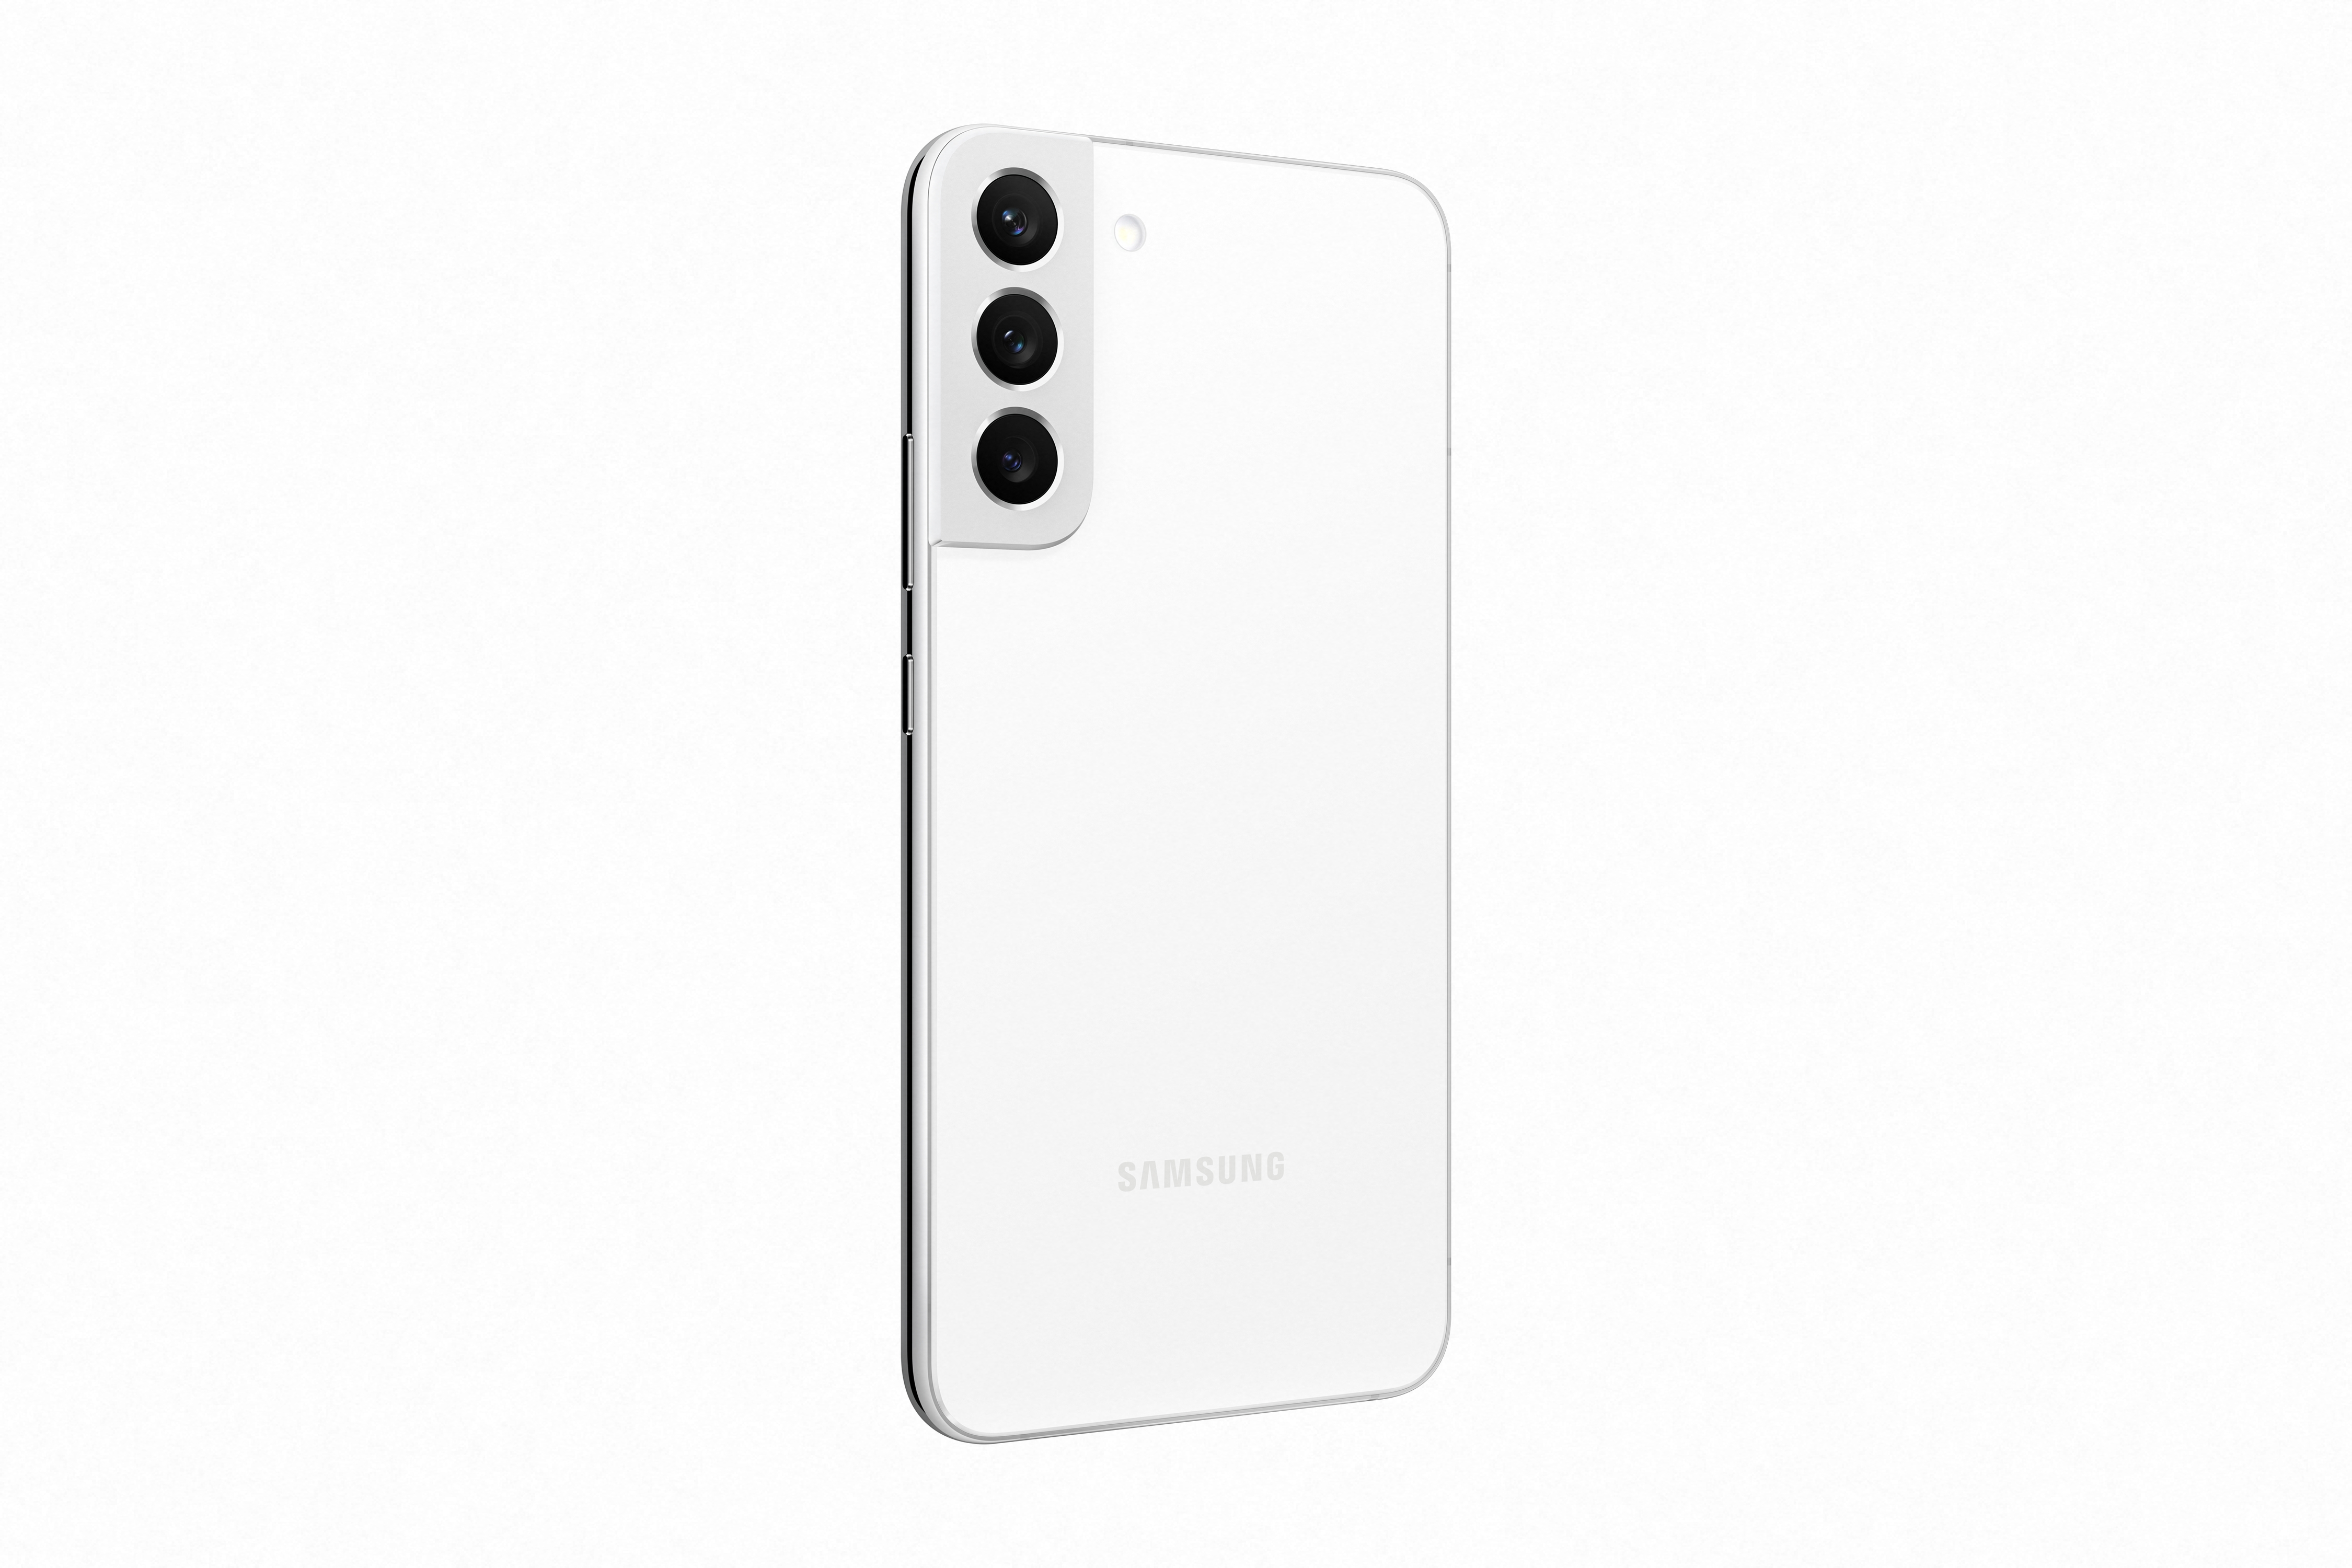 Rent Samsung Galaxy S21 FE 5G Smartphone - 128GB - Dual SIM from €32.90 per  month